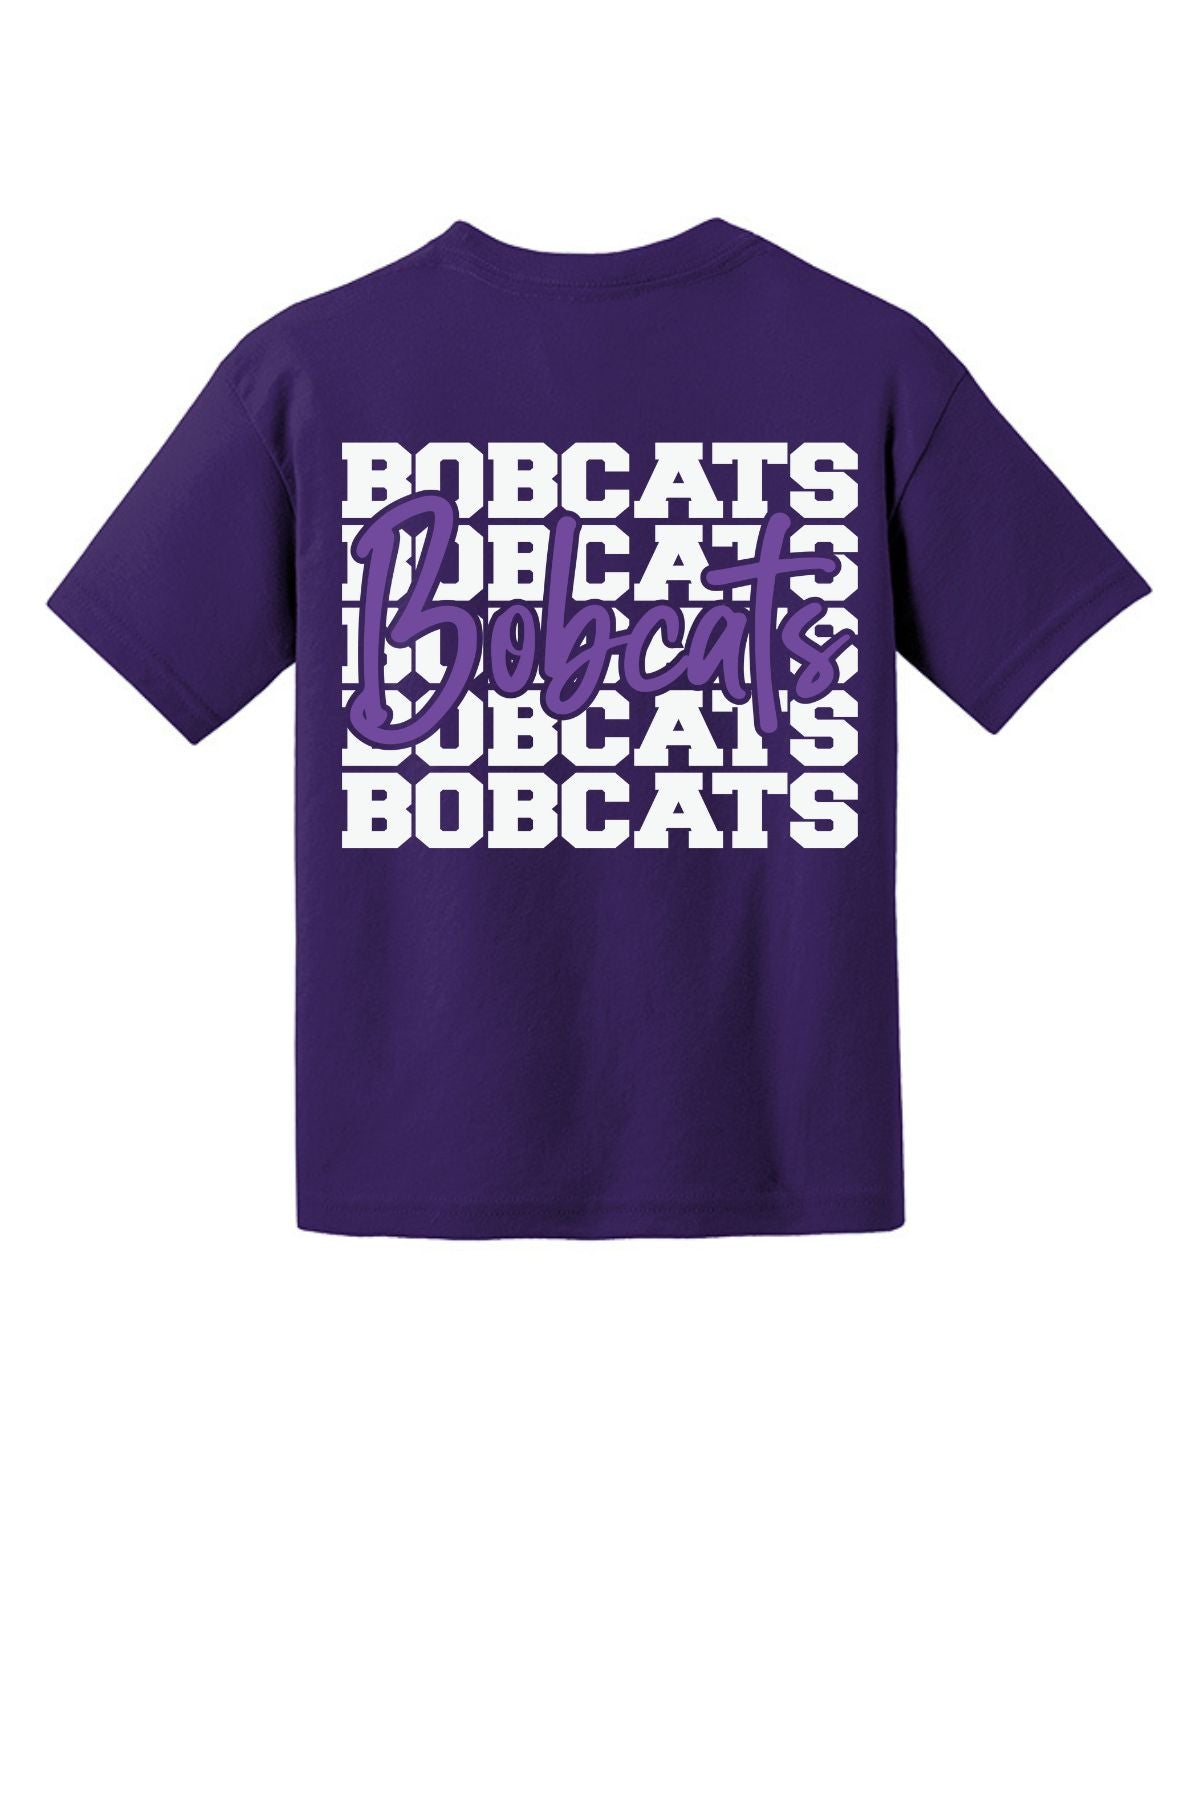 4th Grade Class Shirts - Purple